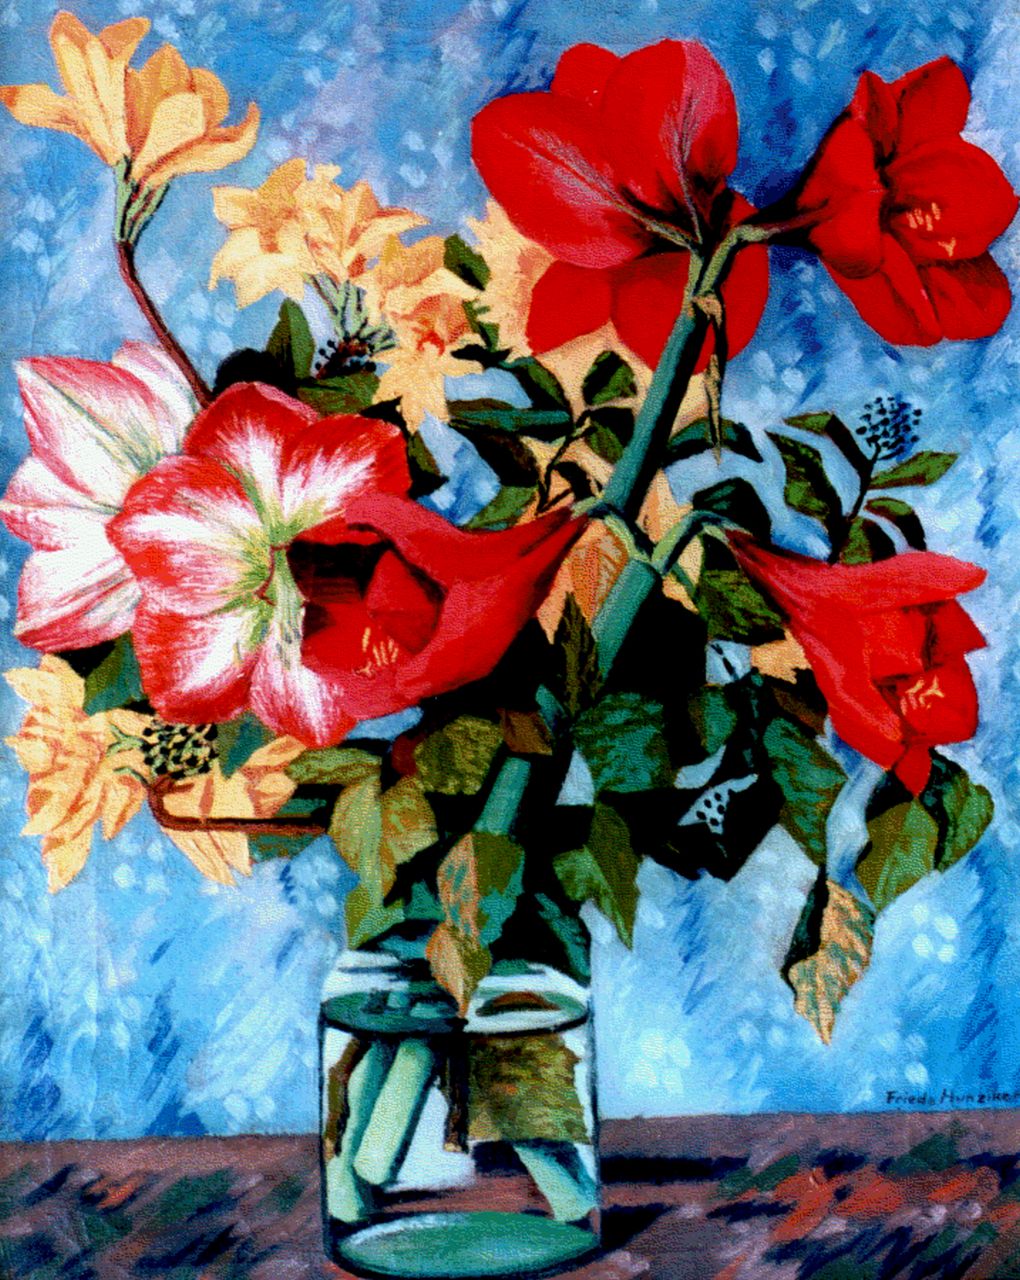 Hunziker F.  | Frieda Hunziker, A flower still life, Öl auf Leinwand 75,6 x 60,5 cm, signed l.r. und early '43